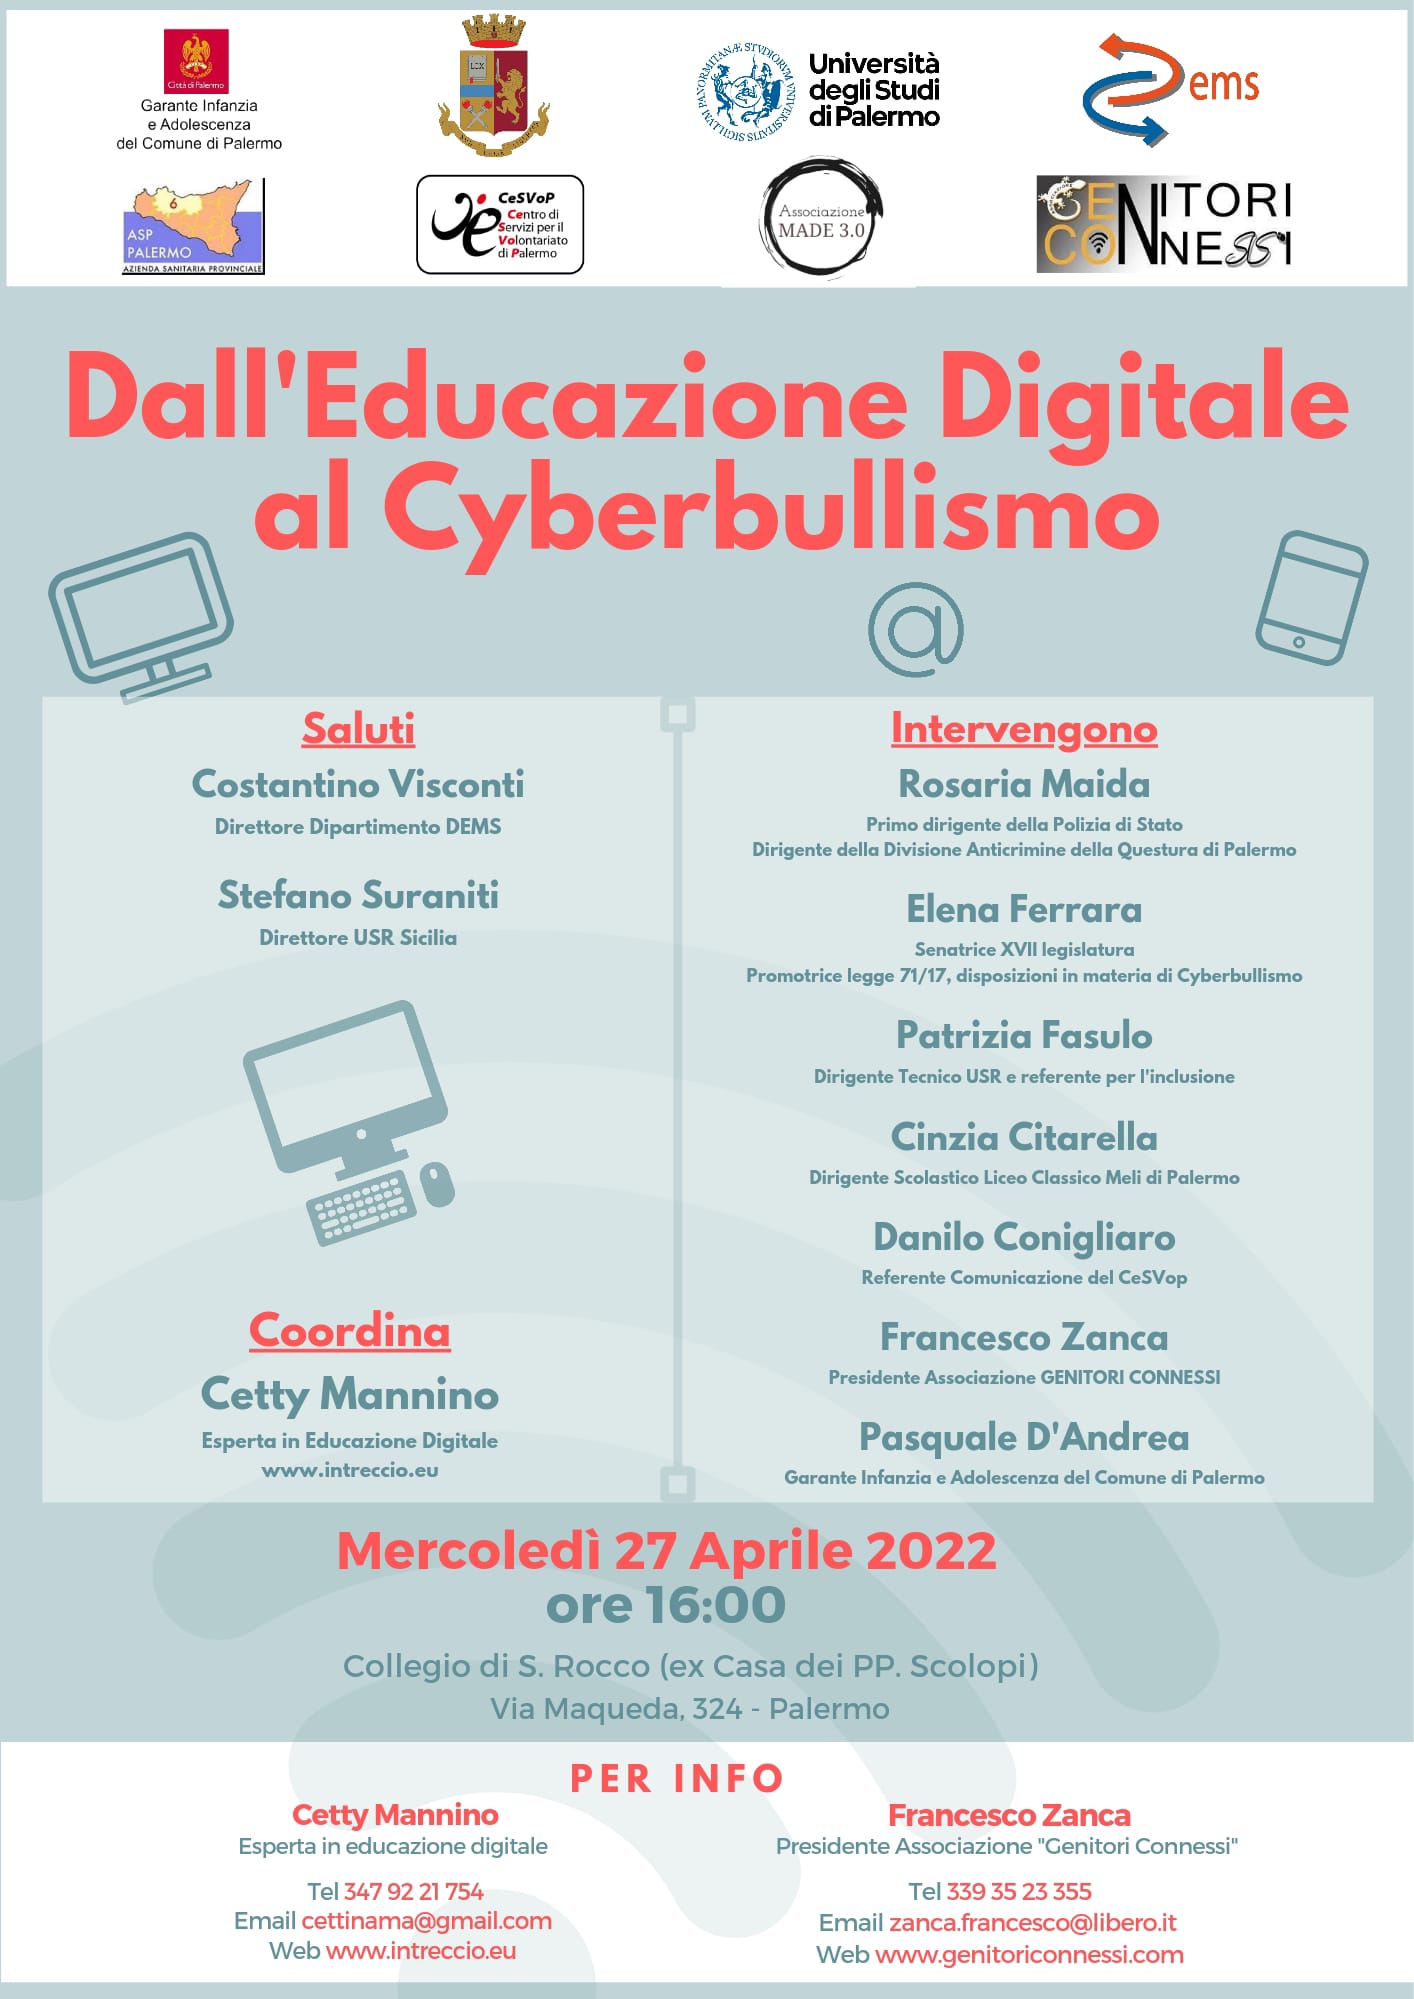 Dall'educazione digitale al cyberbullismo